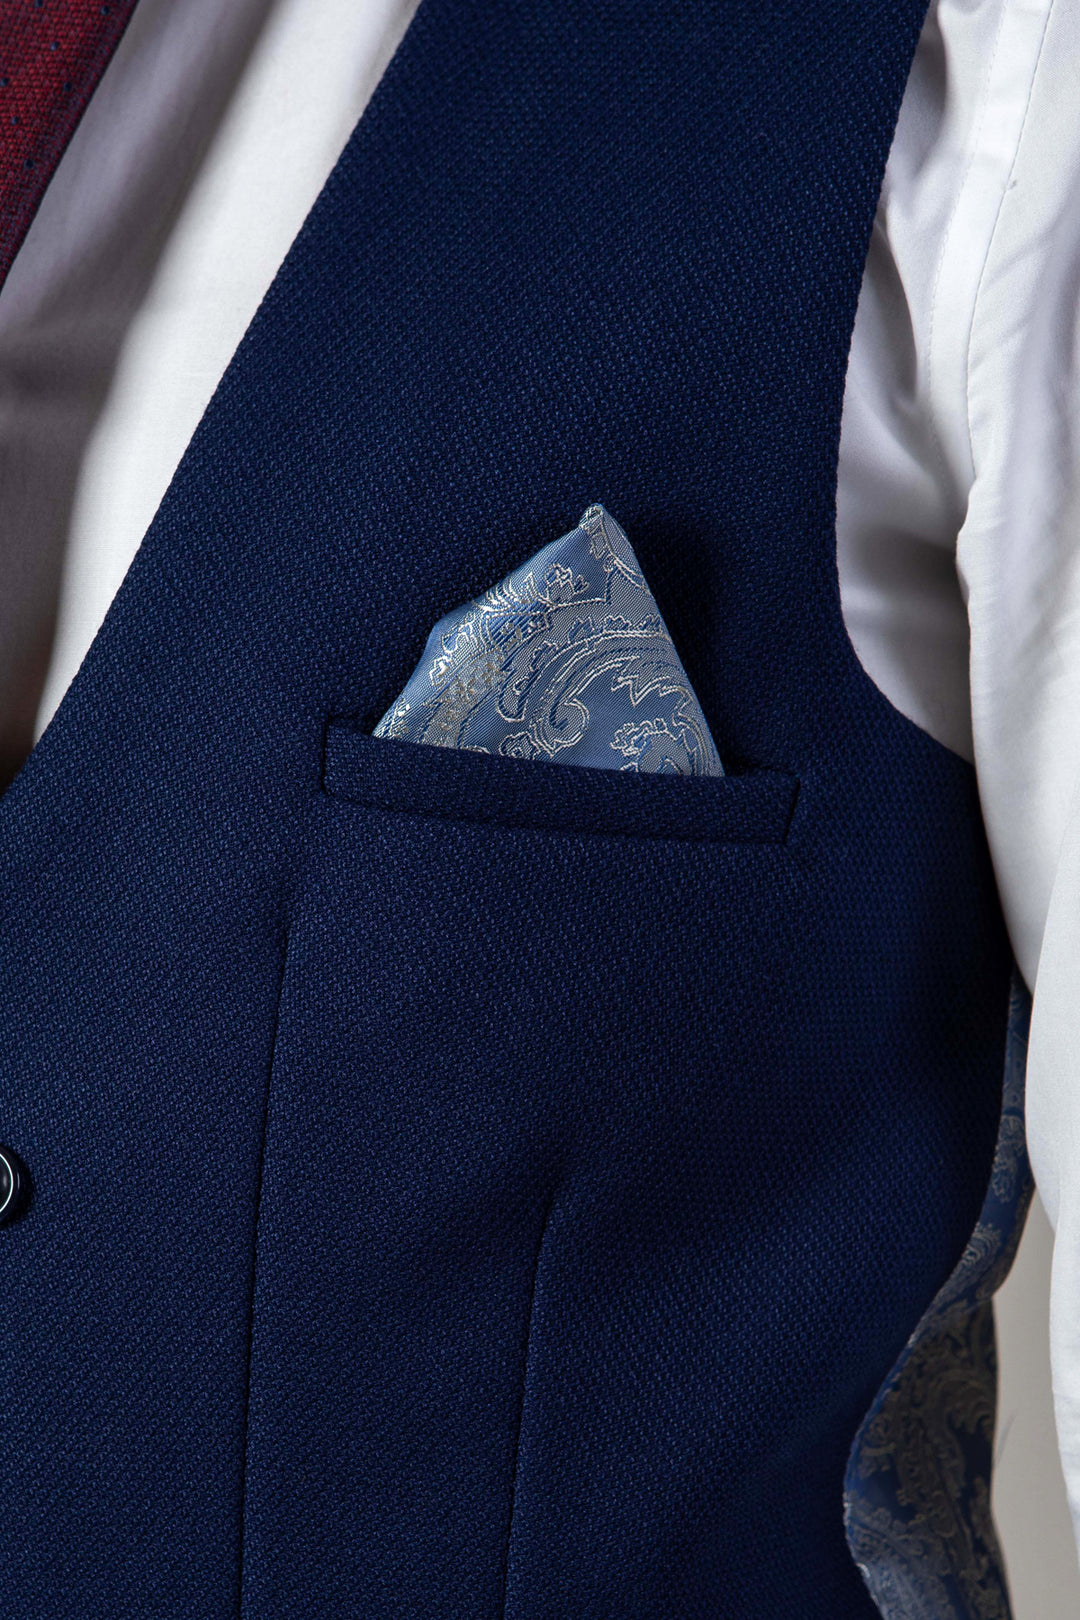 KELVIN - Royal Blue Double Breasted Waistcoat